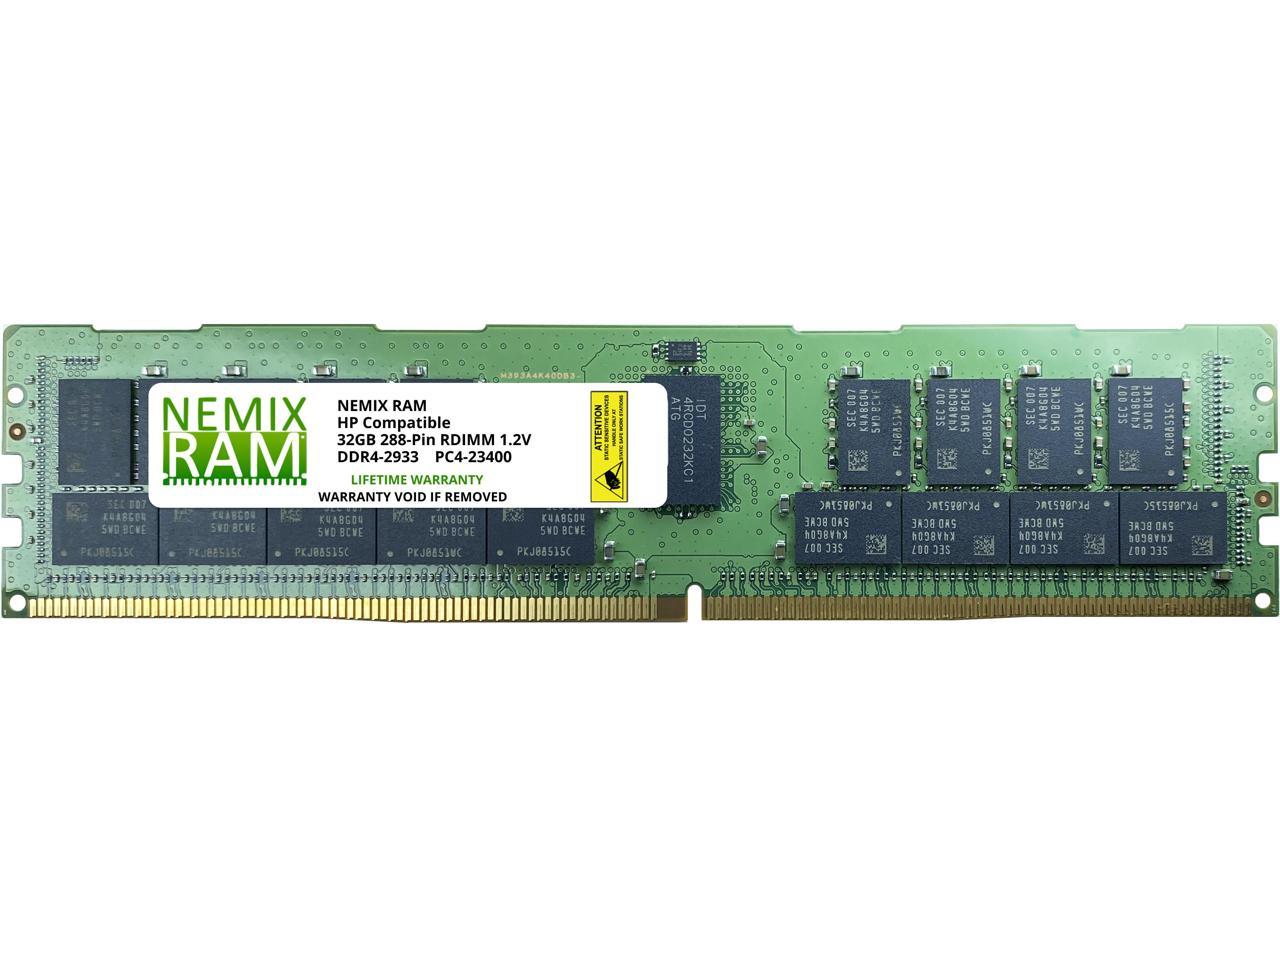 32GB RDIMM Memory for HP Z4 G4 Workstation DDR4-2933 by Nemix Ram 